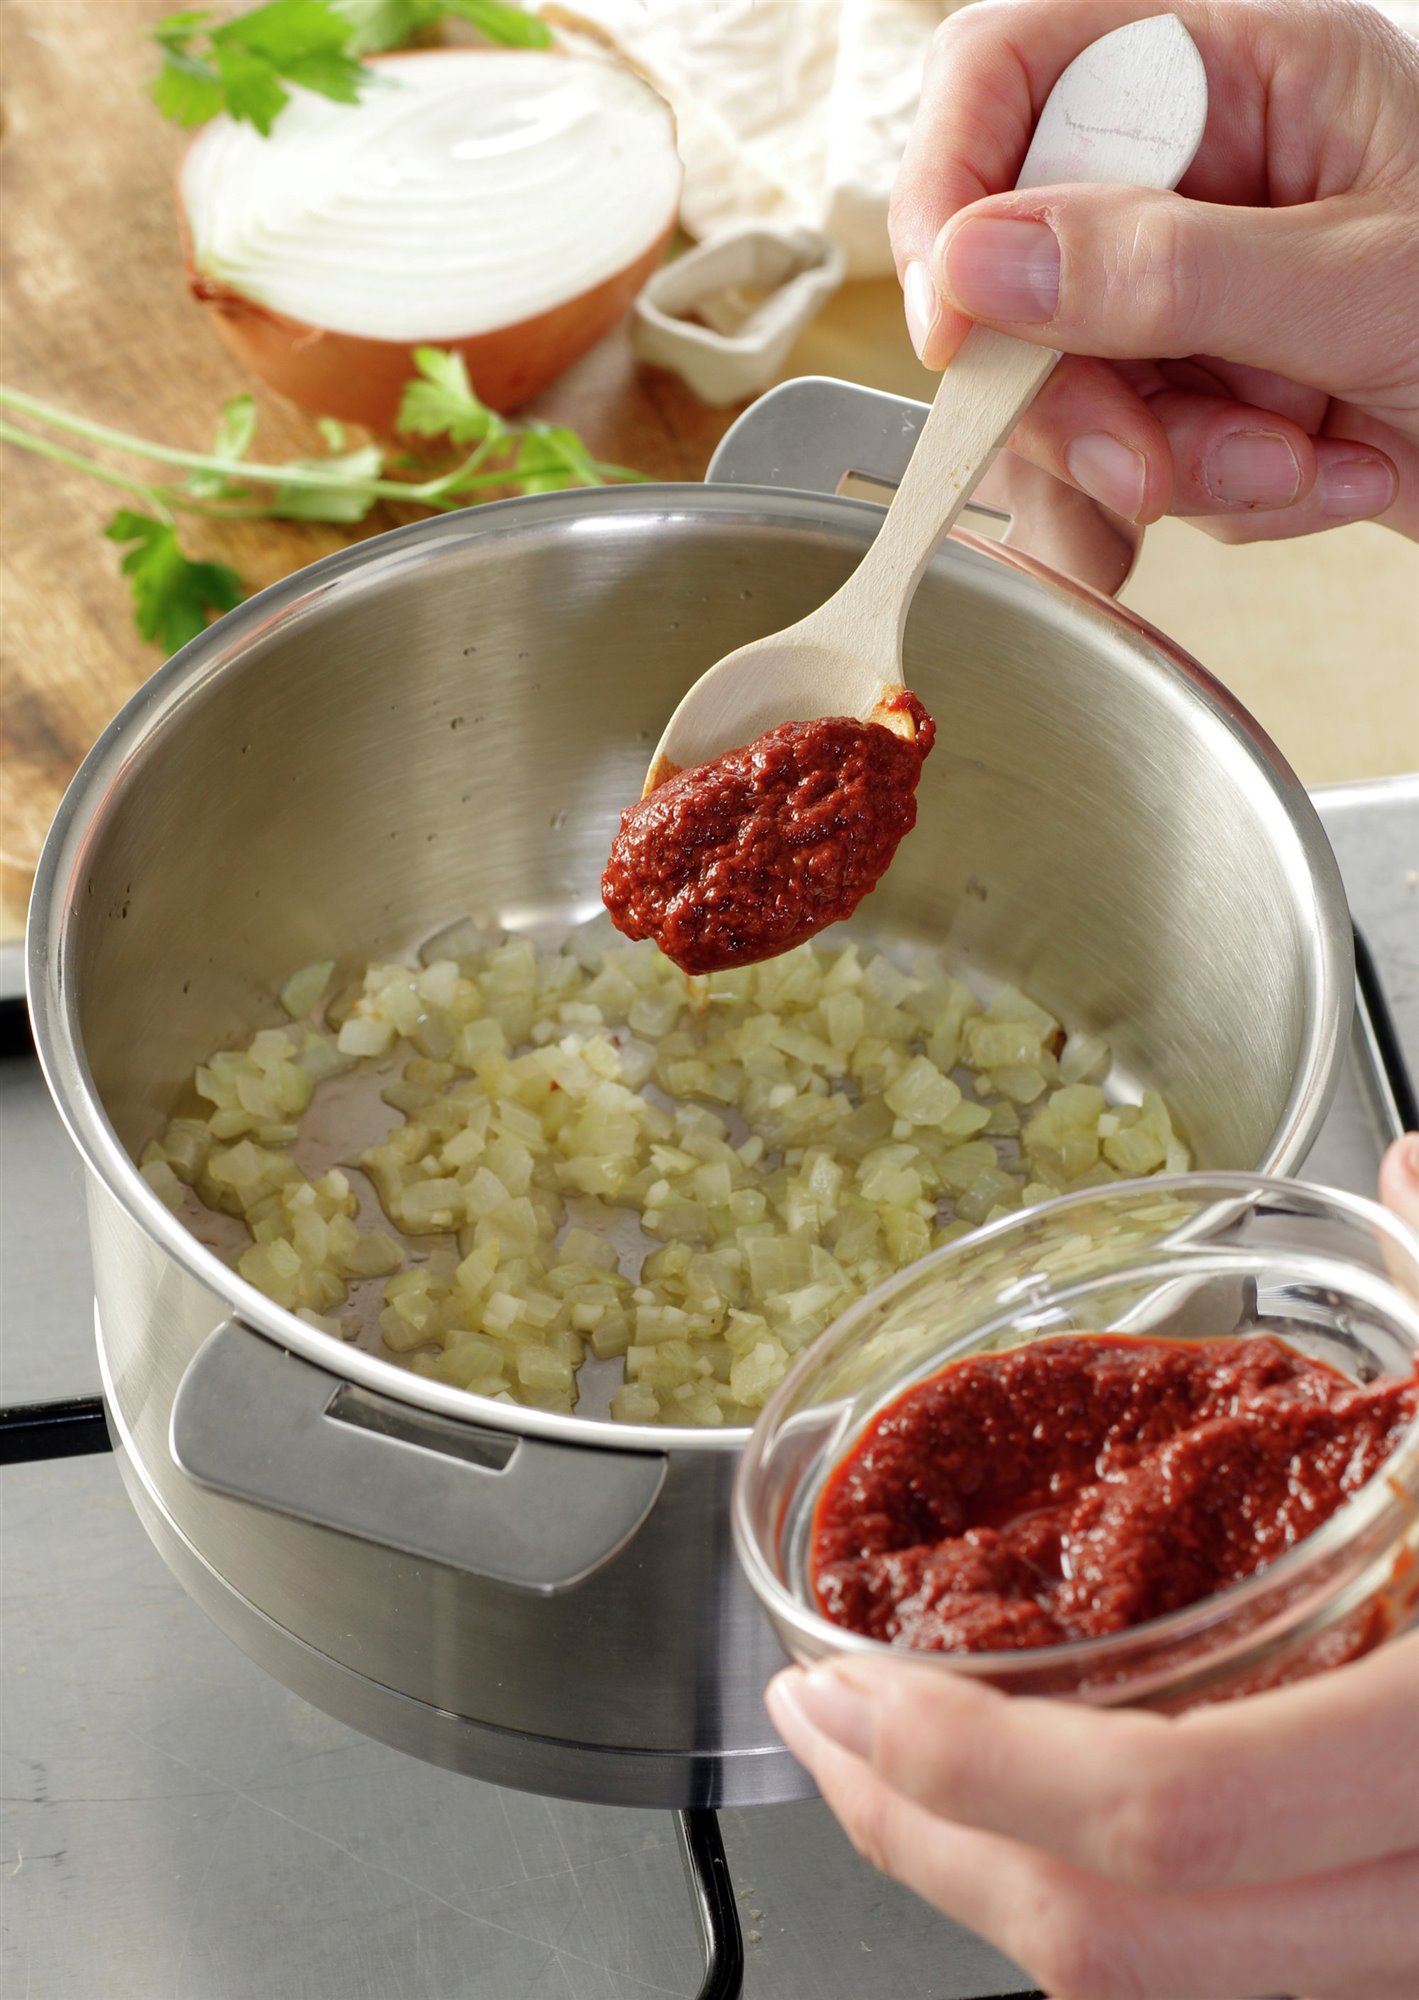 2. Prepara la salsa